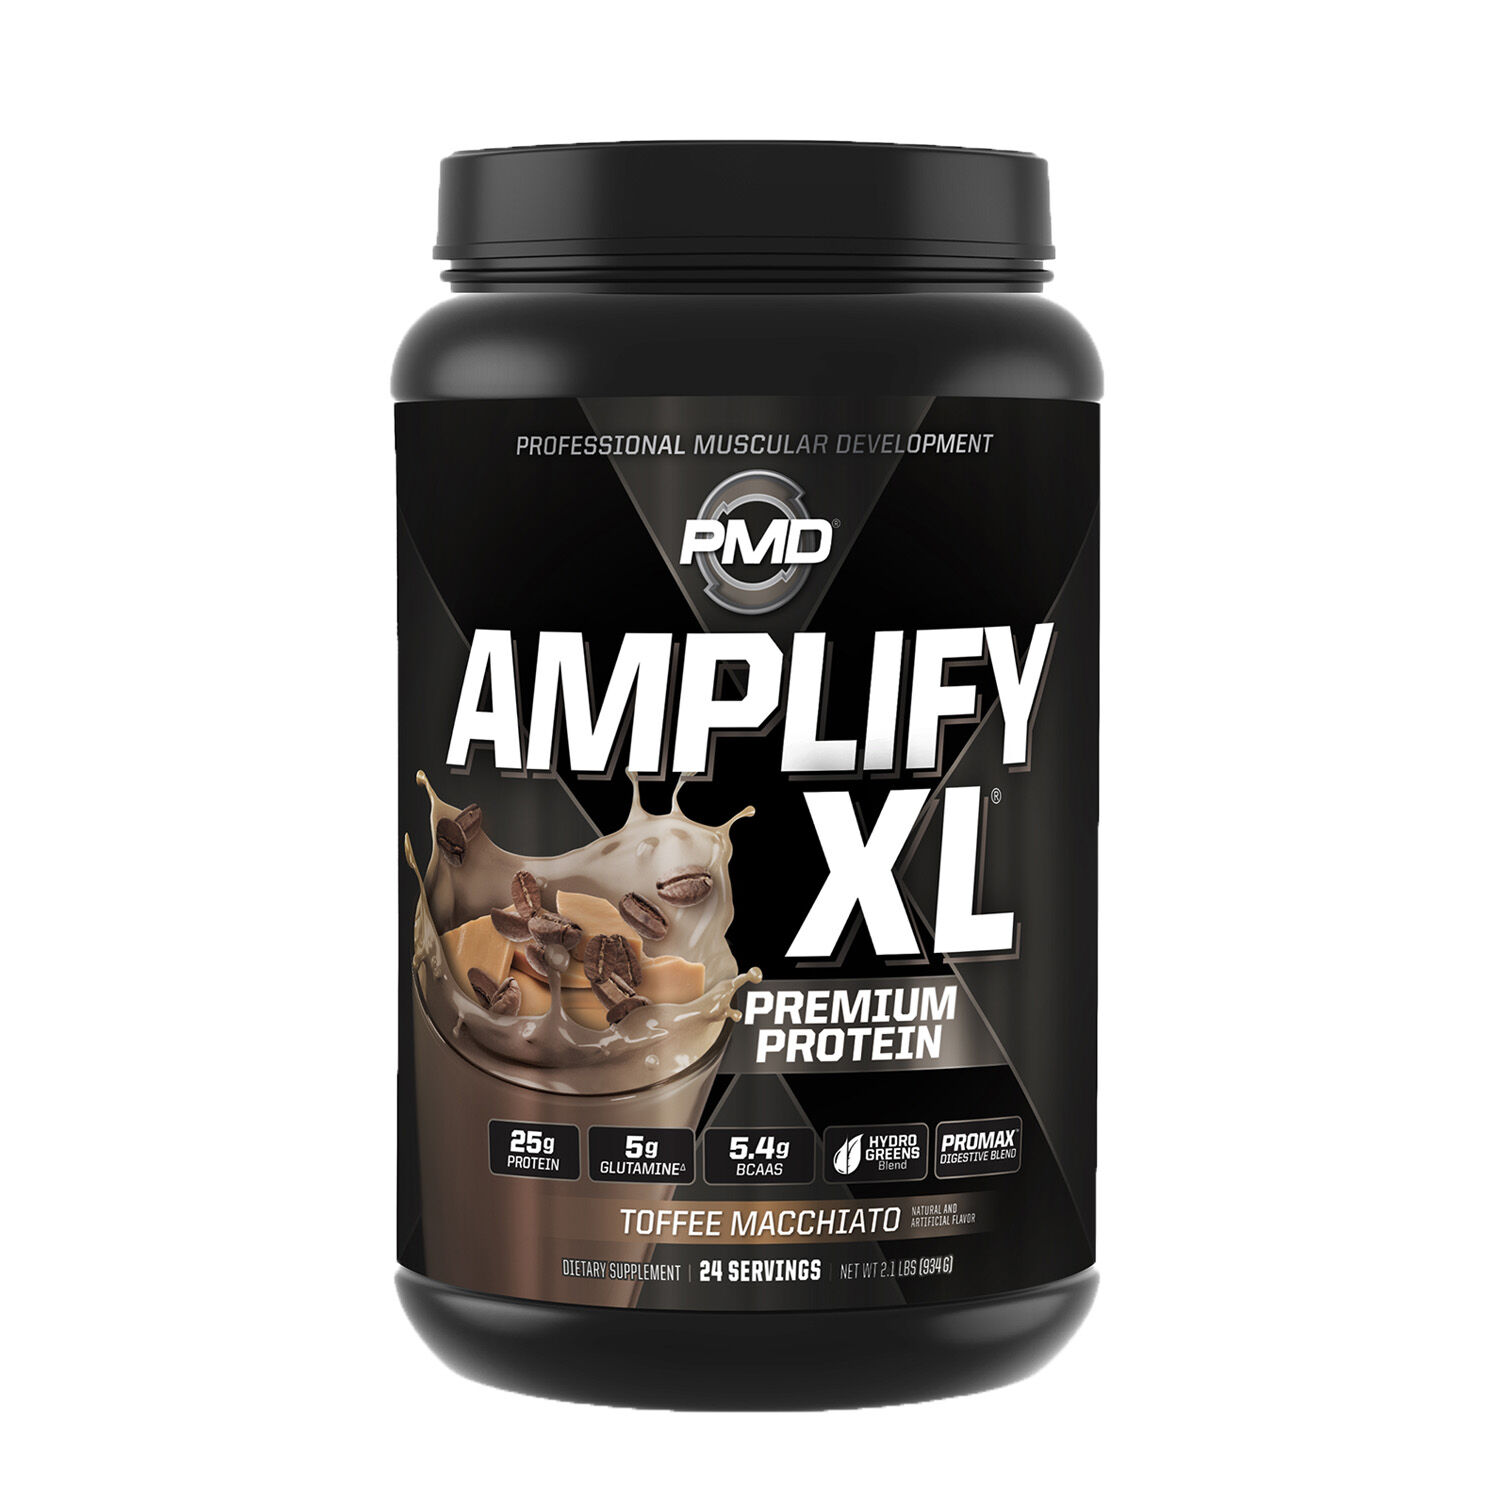 PMD Amplify XL Premium Protein Toffee Macchiato